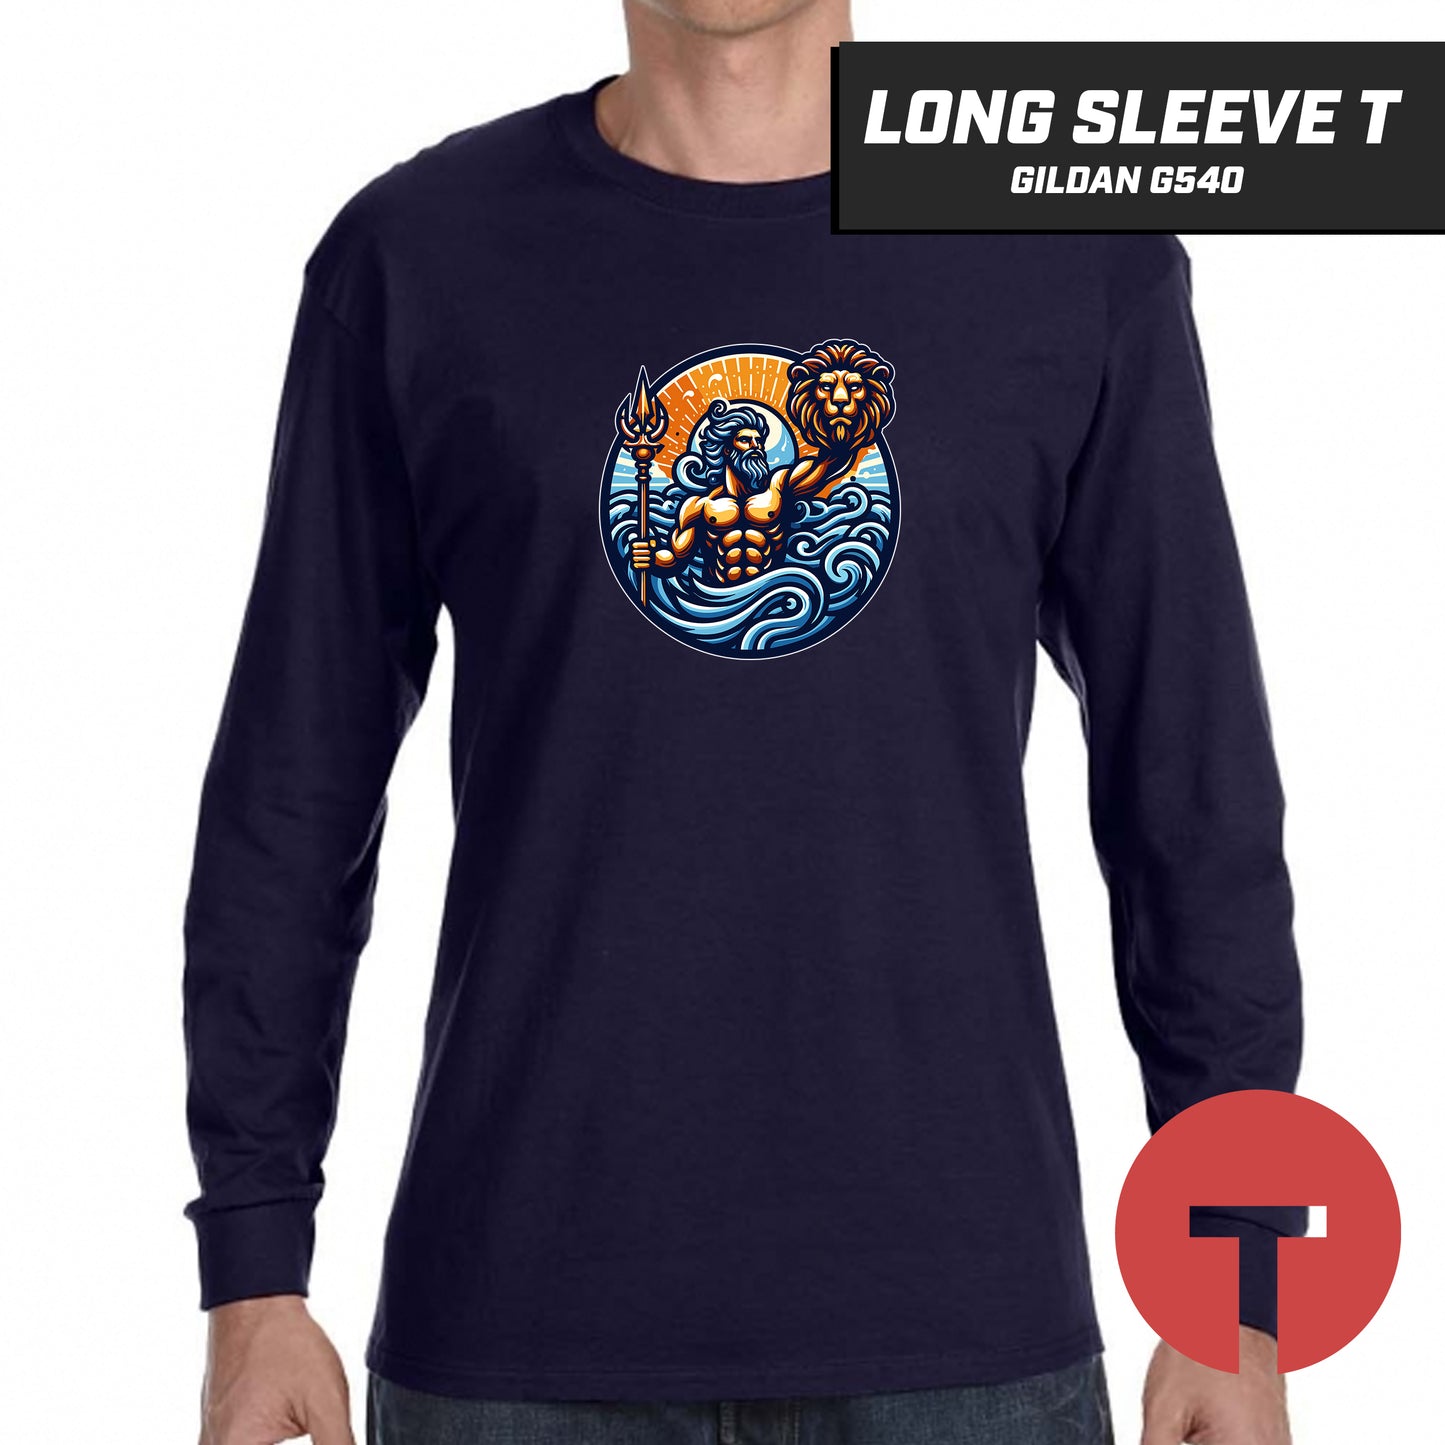 Detachment Poseidon - Long-Sleeve T-Shirt Gildan G540